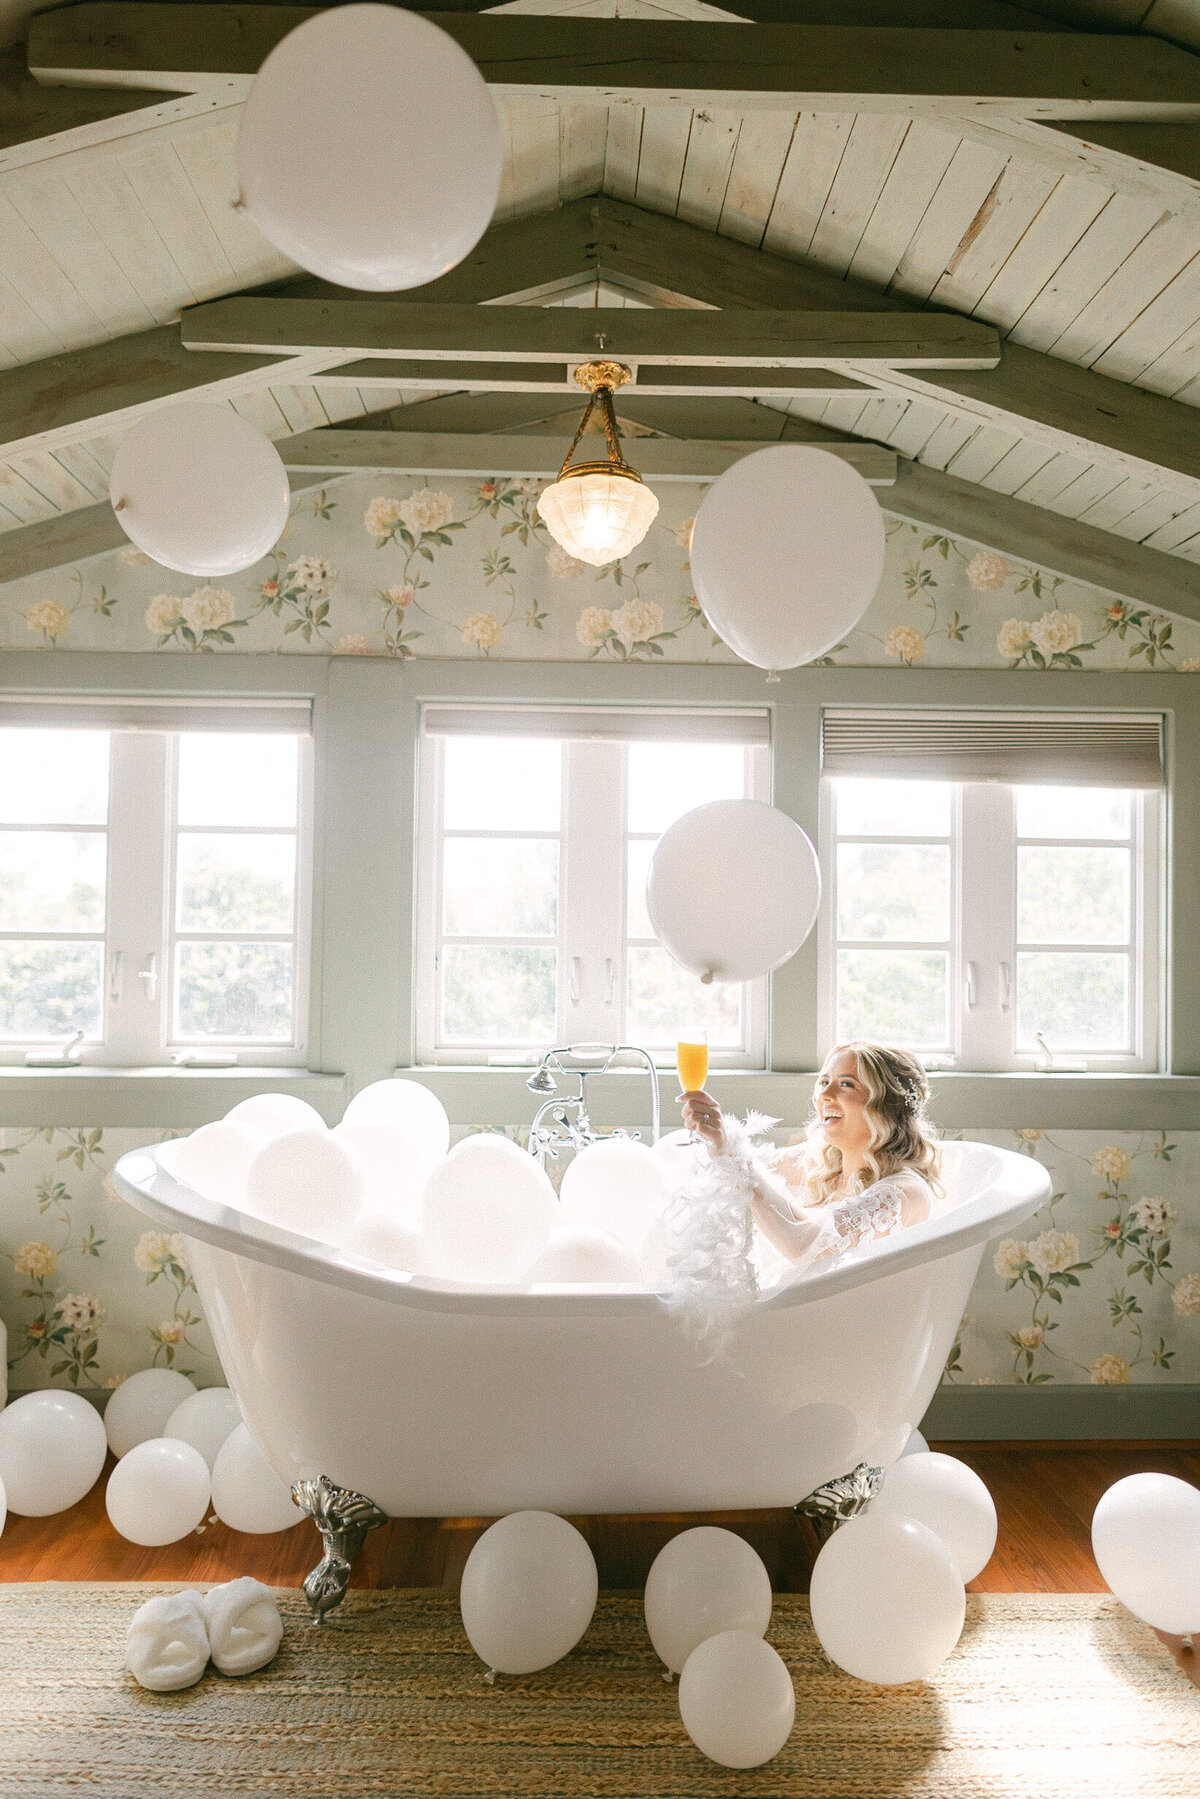 walton house bride balloons bathtub by kolour haus-1